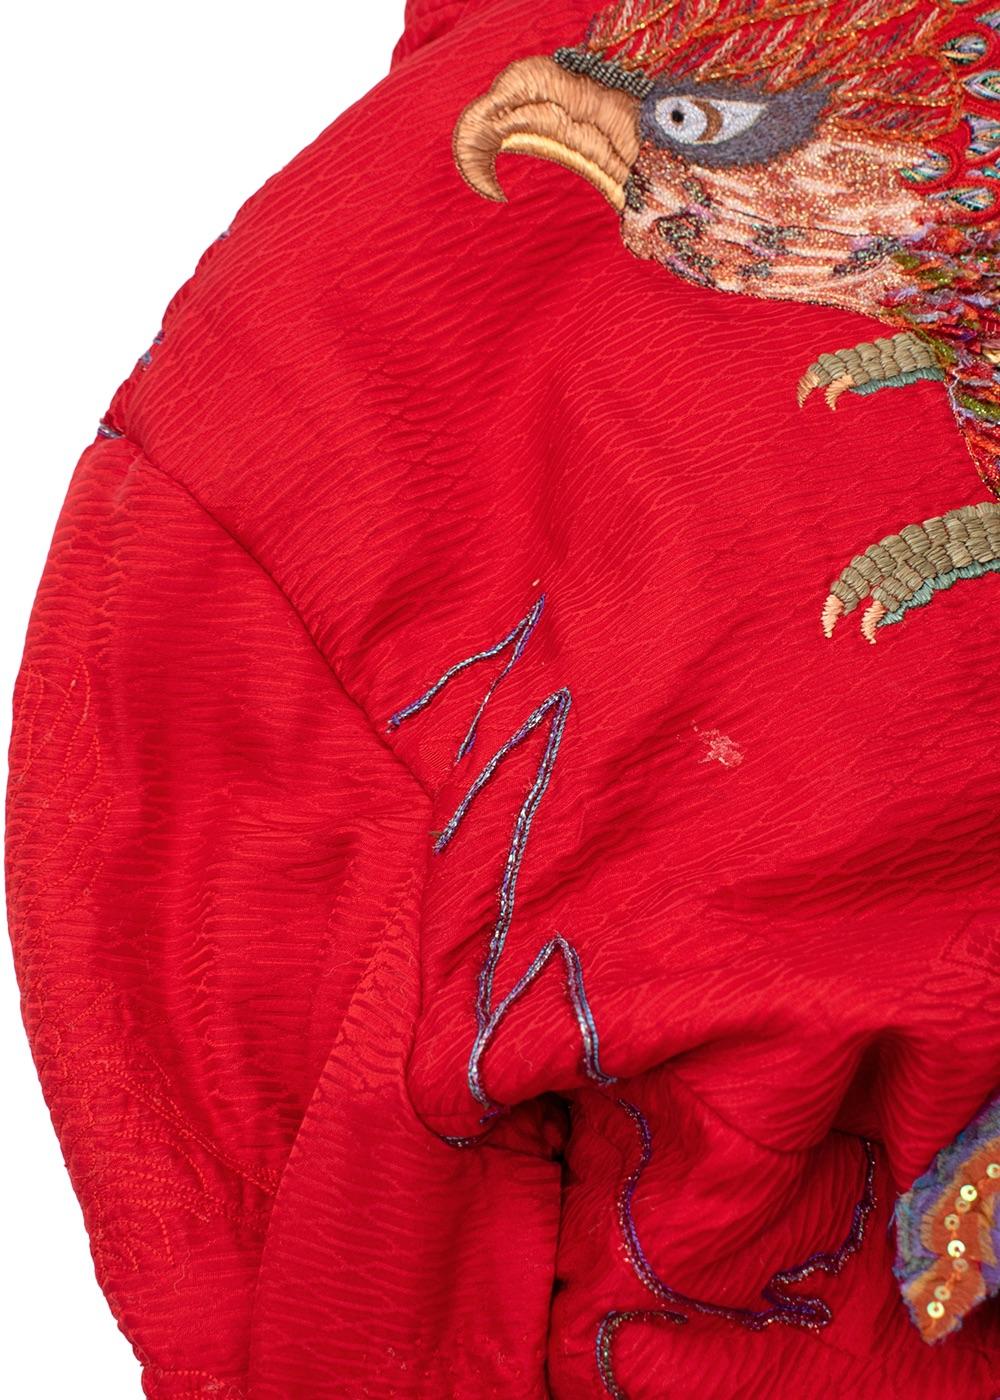 Maharishi Vintage Red Silk Phoenix Embroidered Jacket For Sale 4